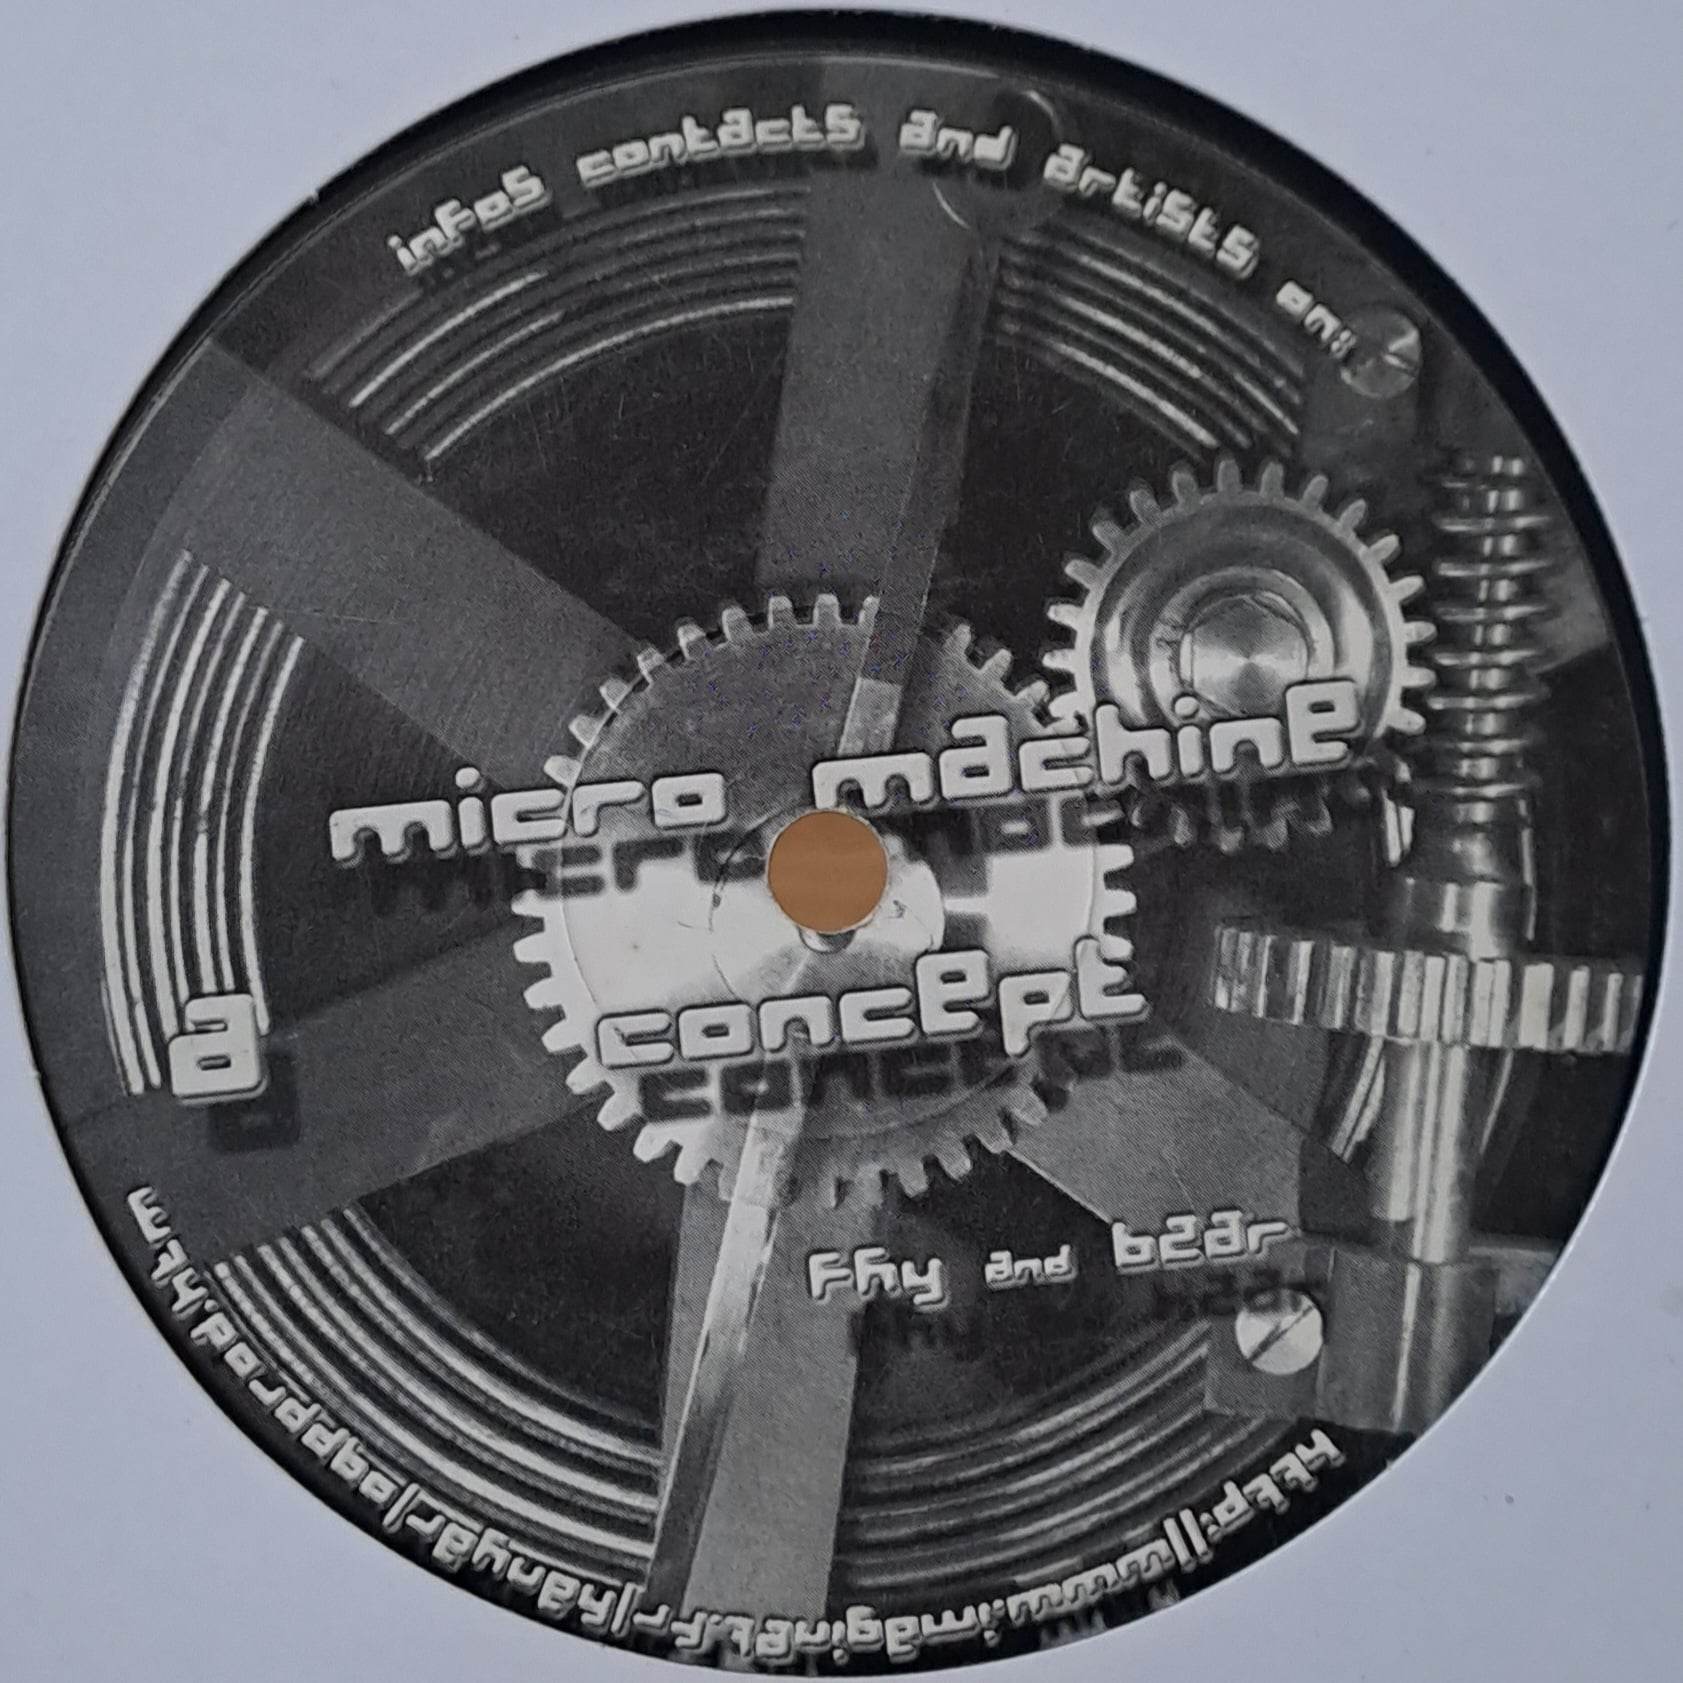 Micromachine 1 - vinyle freetekno